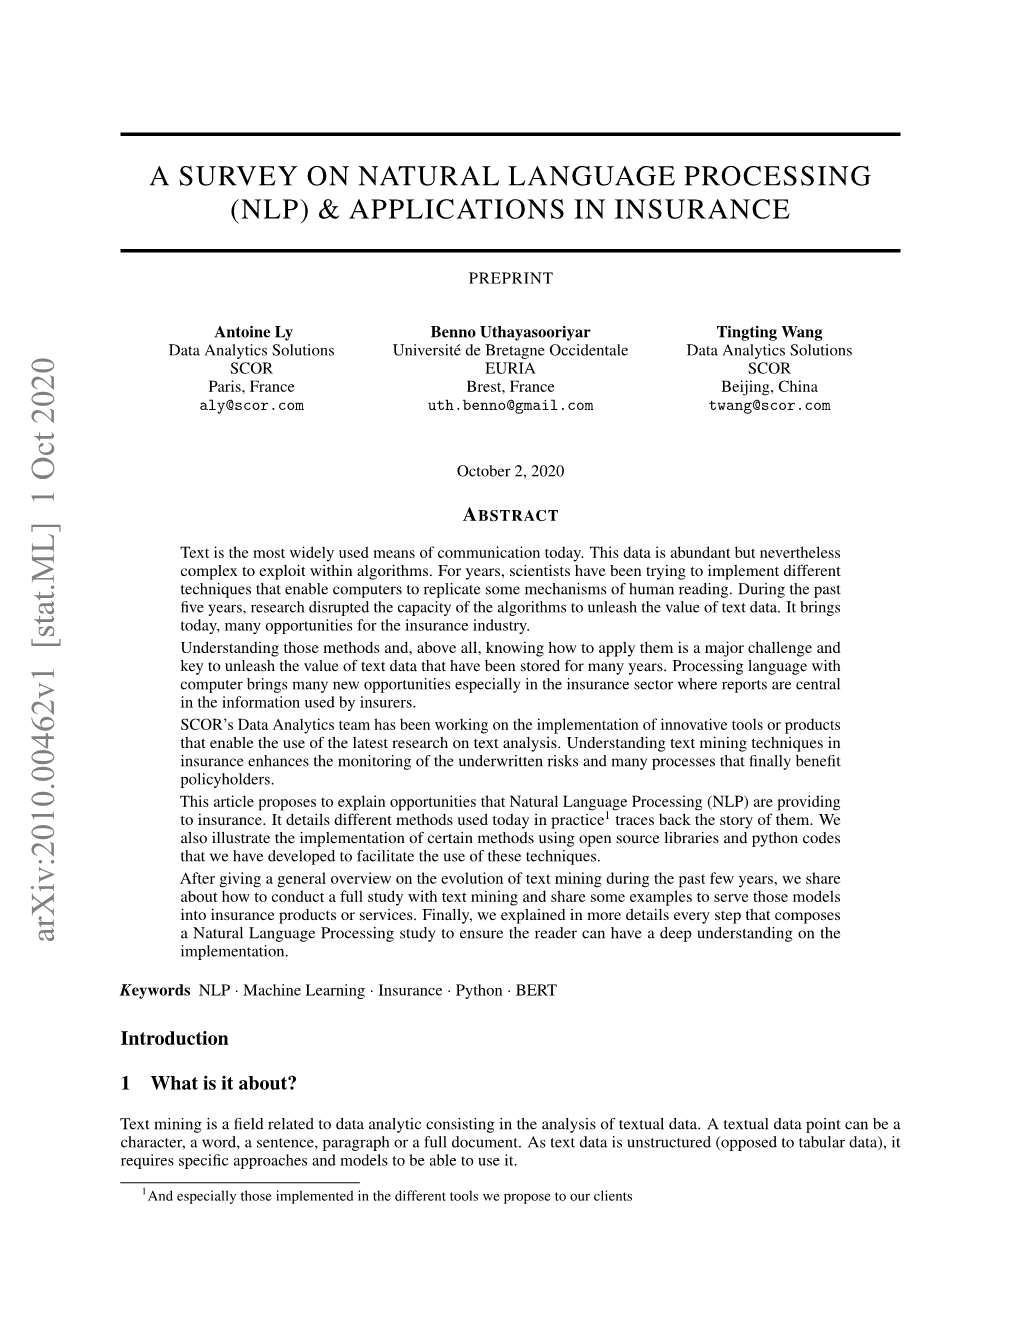 A Survey on Natural Language Processing (Nlp)&Applicationsininsurance